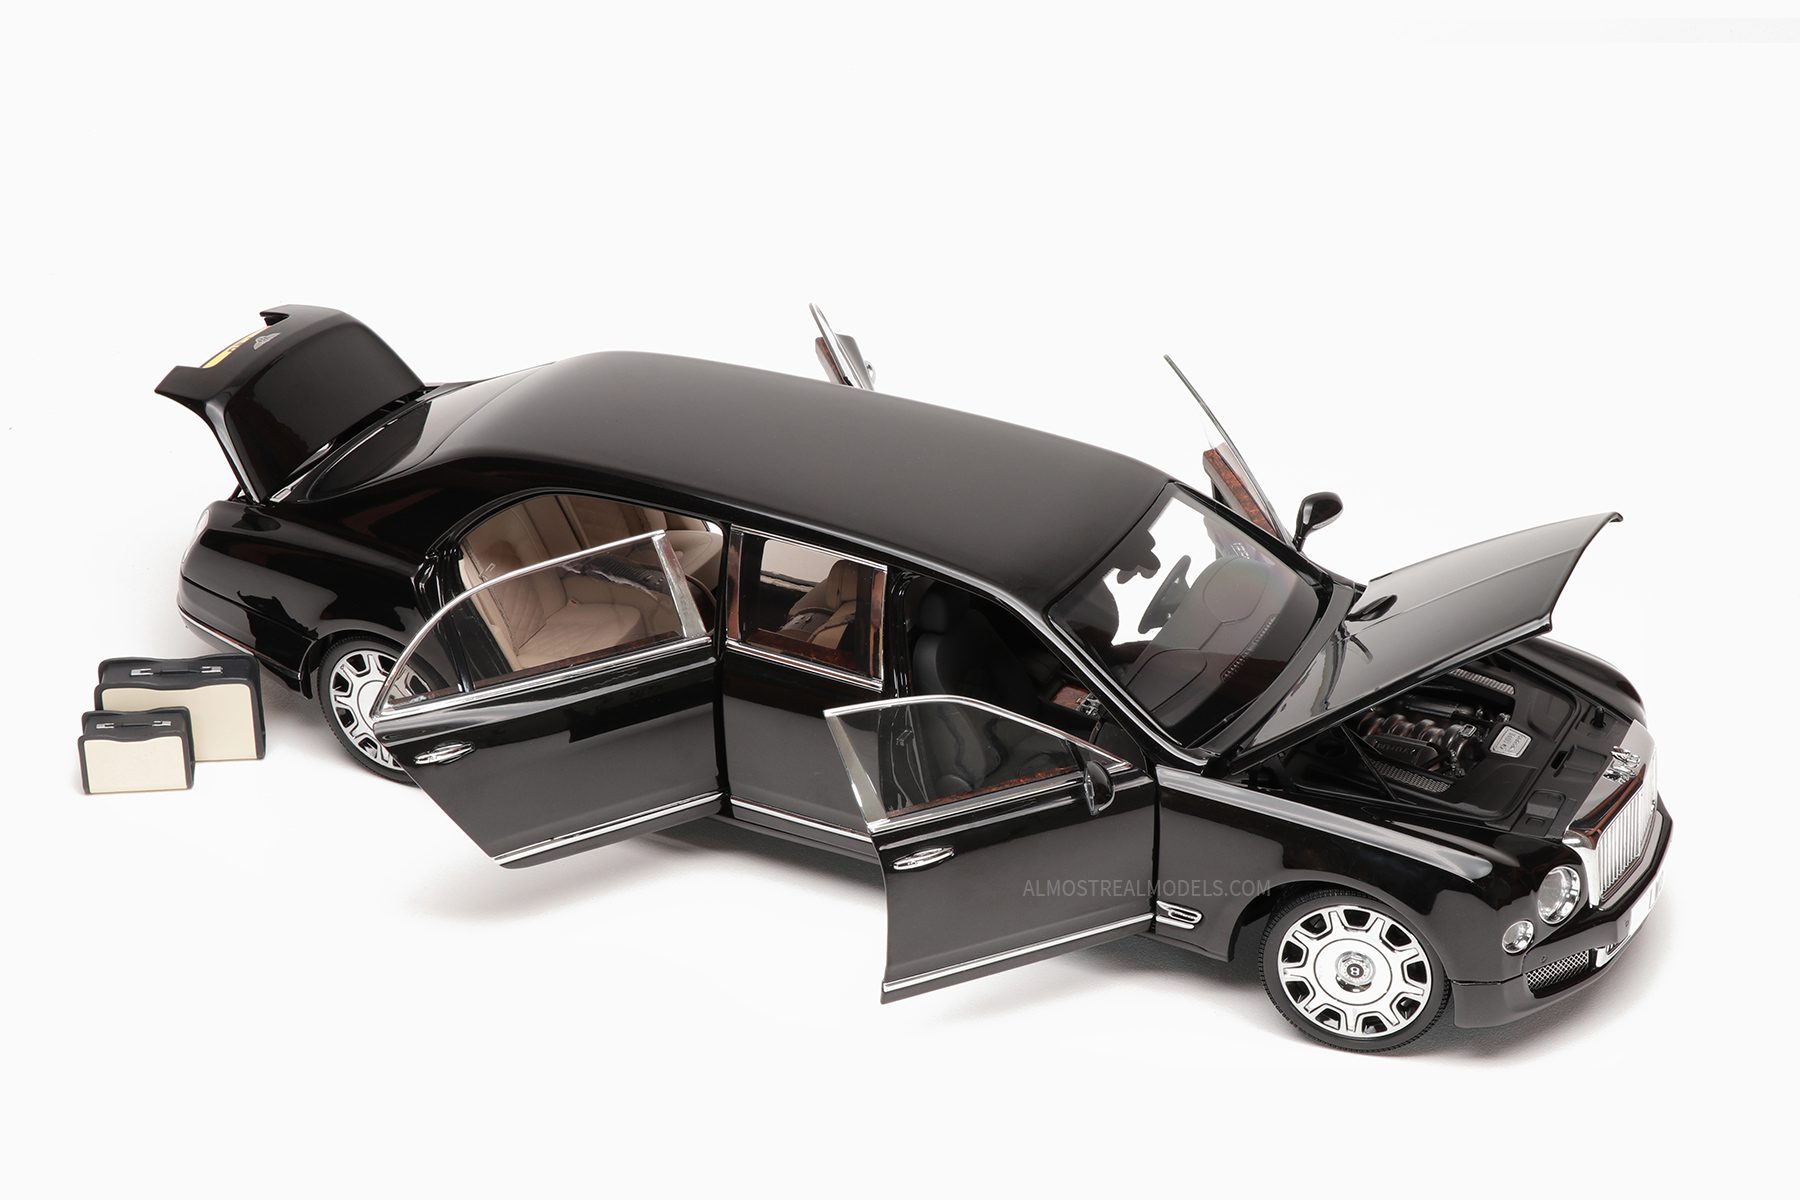 Details about   1:24 Bentley Mulsanne Limousine Model Car Diecast Toy Vehicle Collection Black 